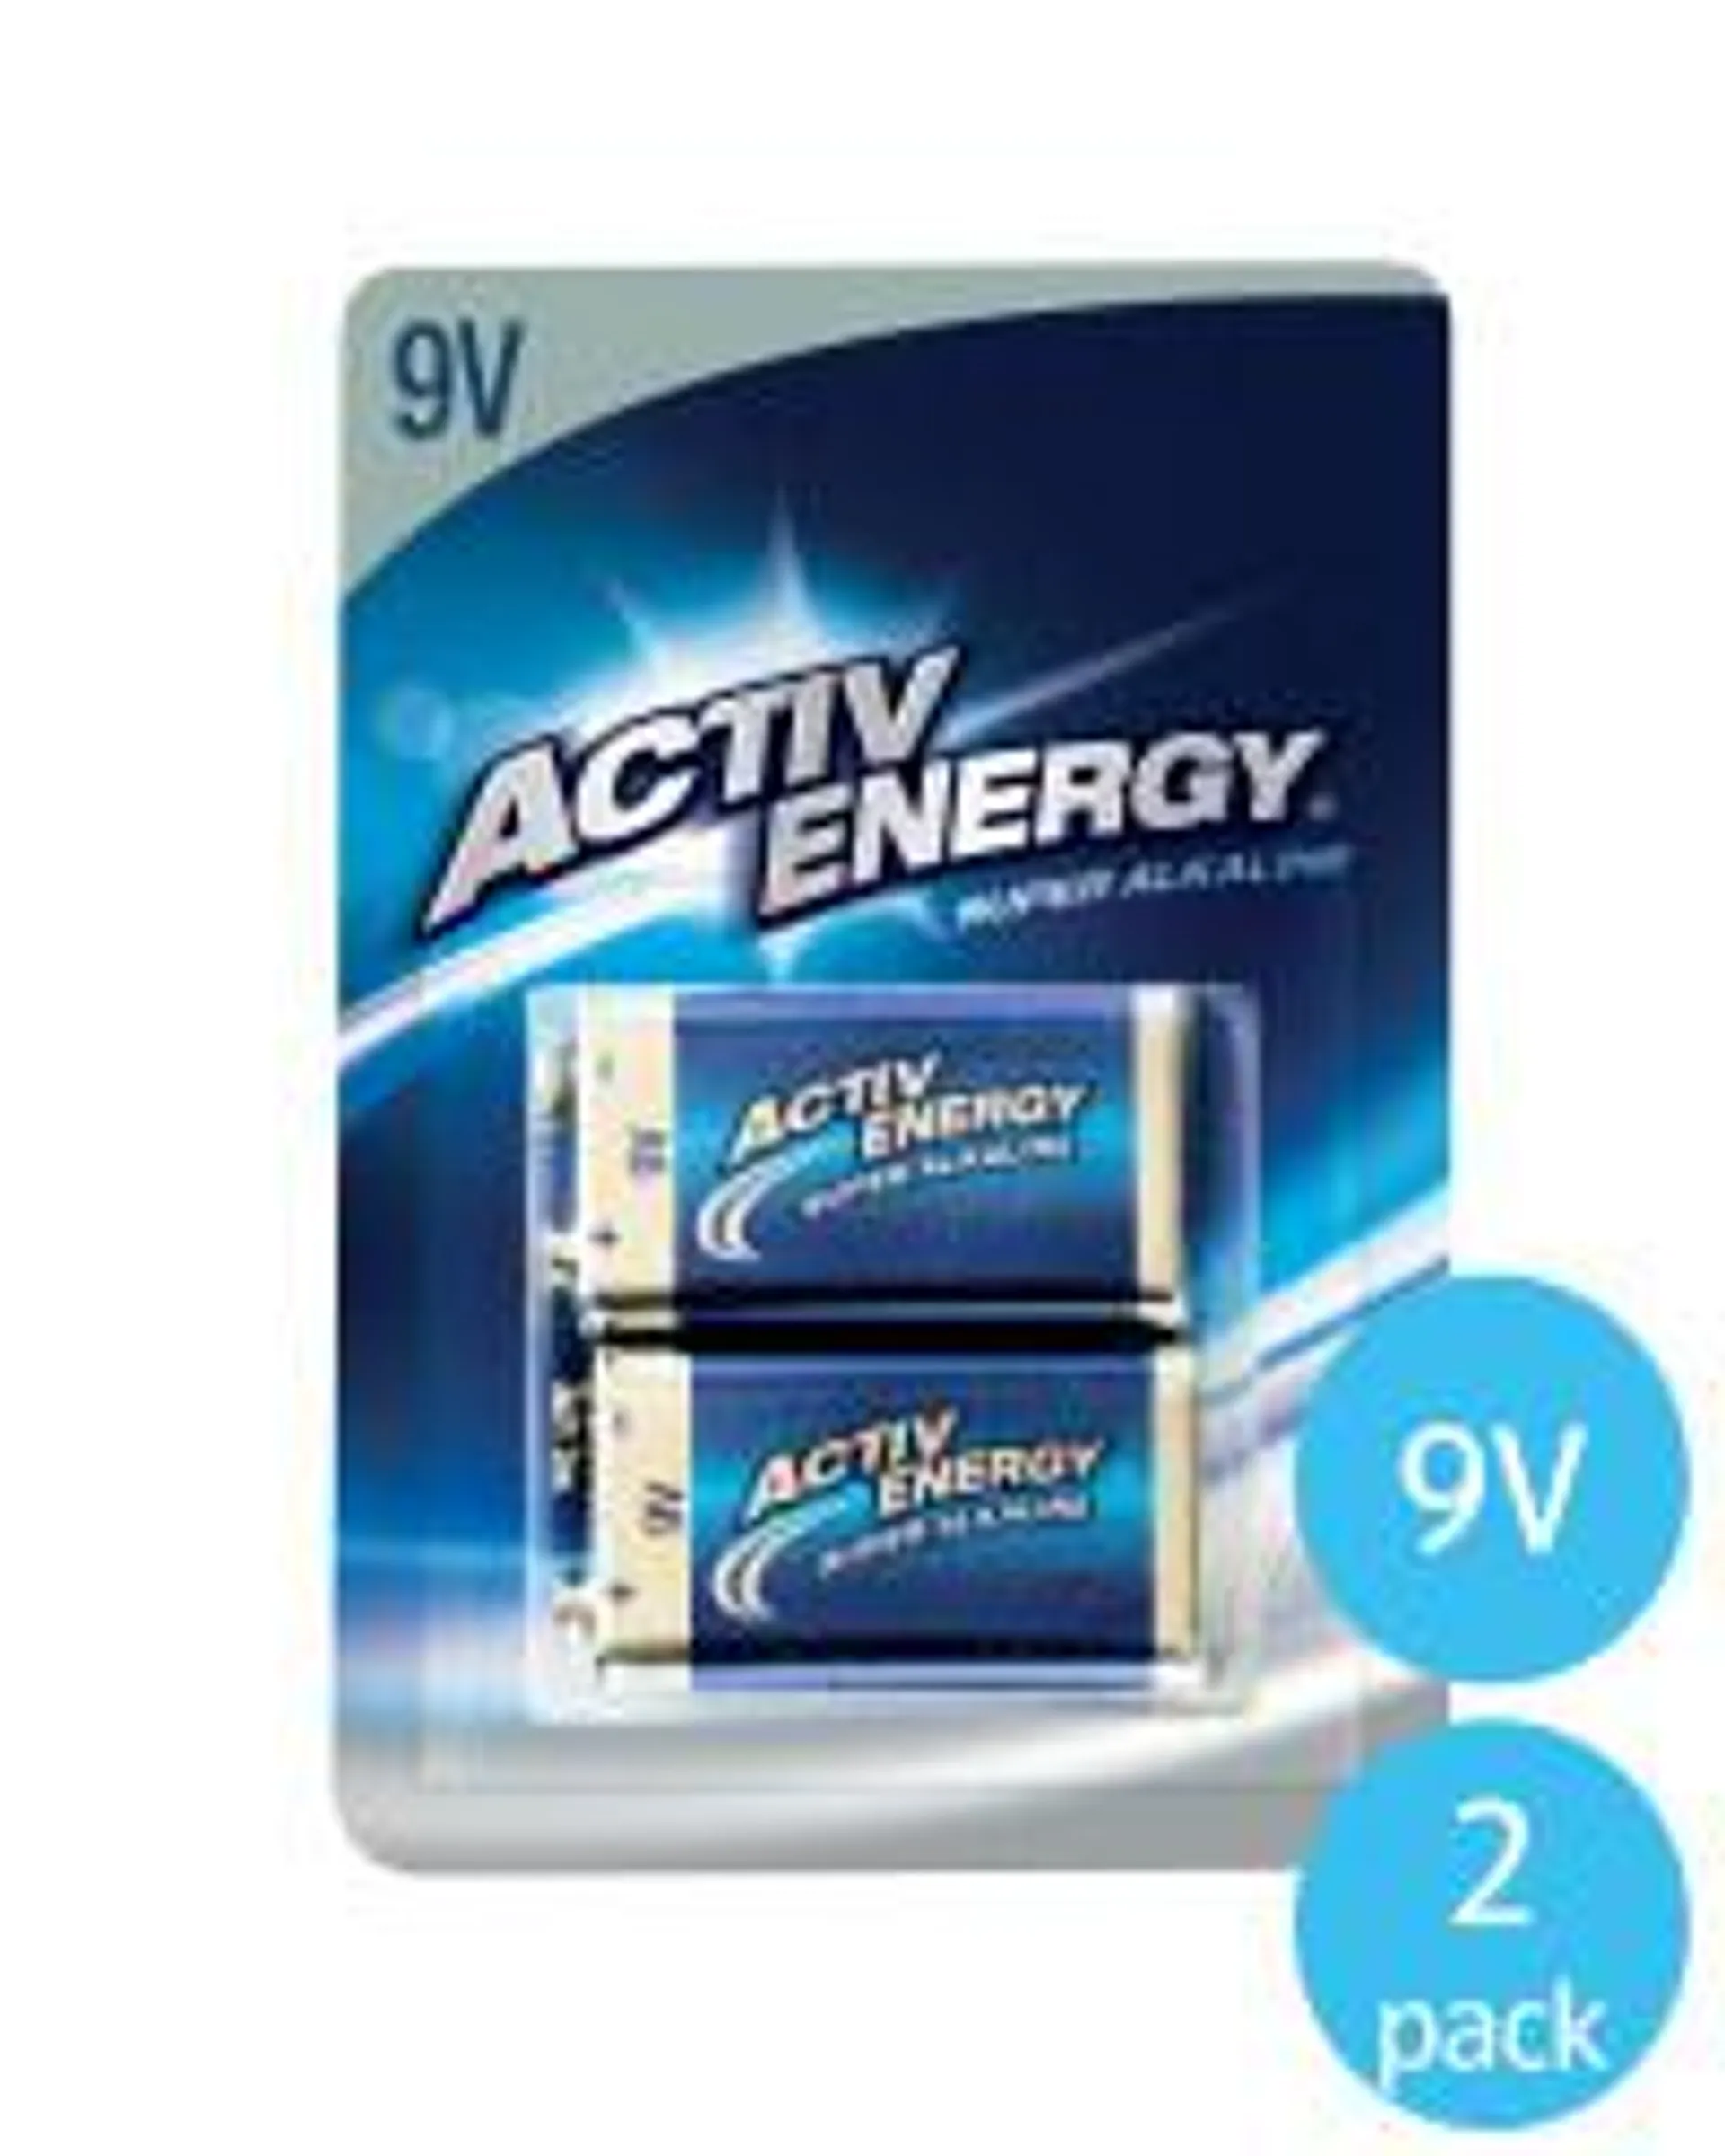 Activ Energy 9V Batteries Pack of 2